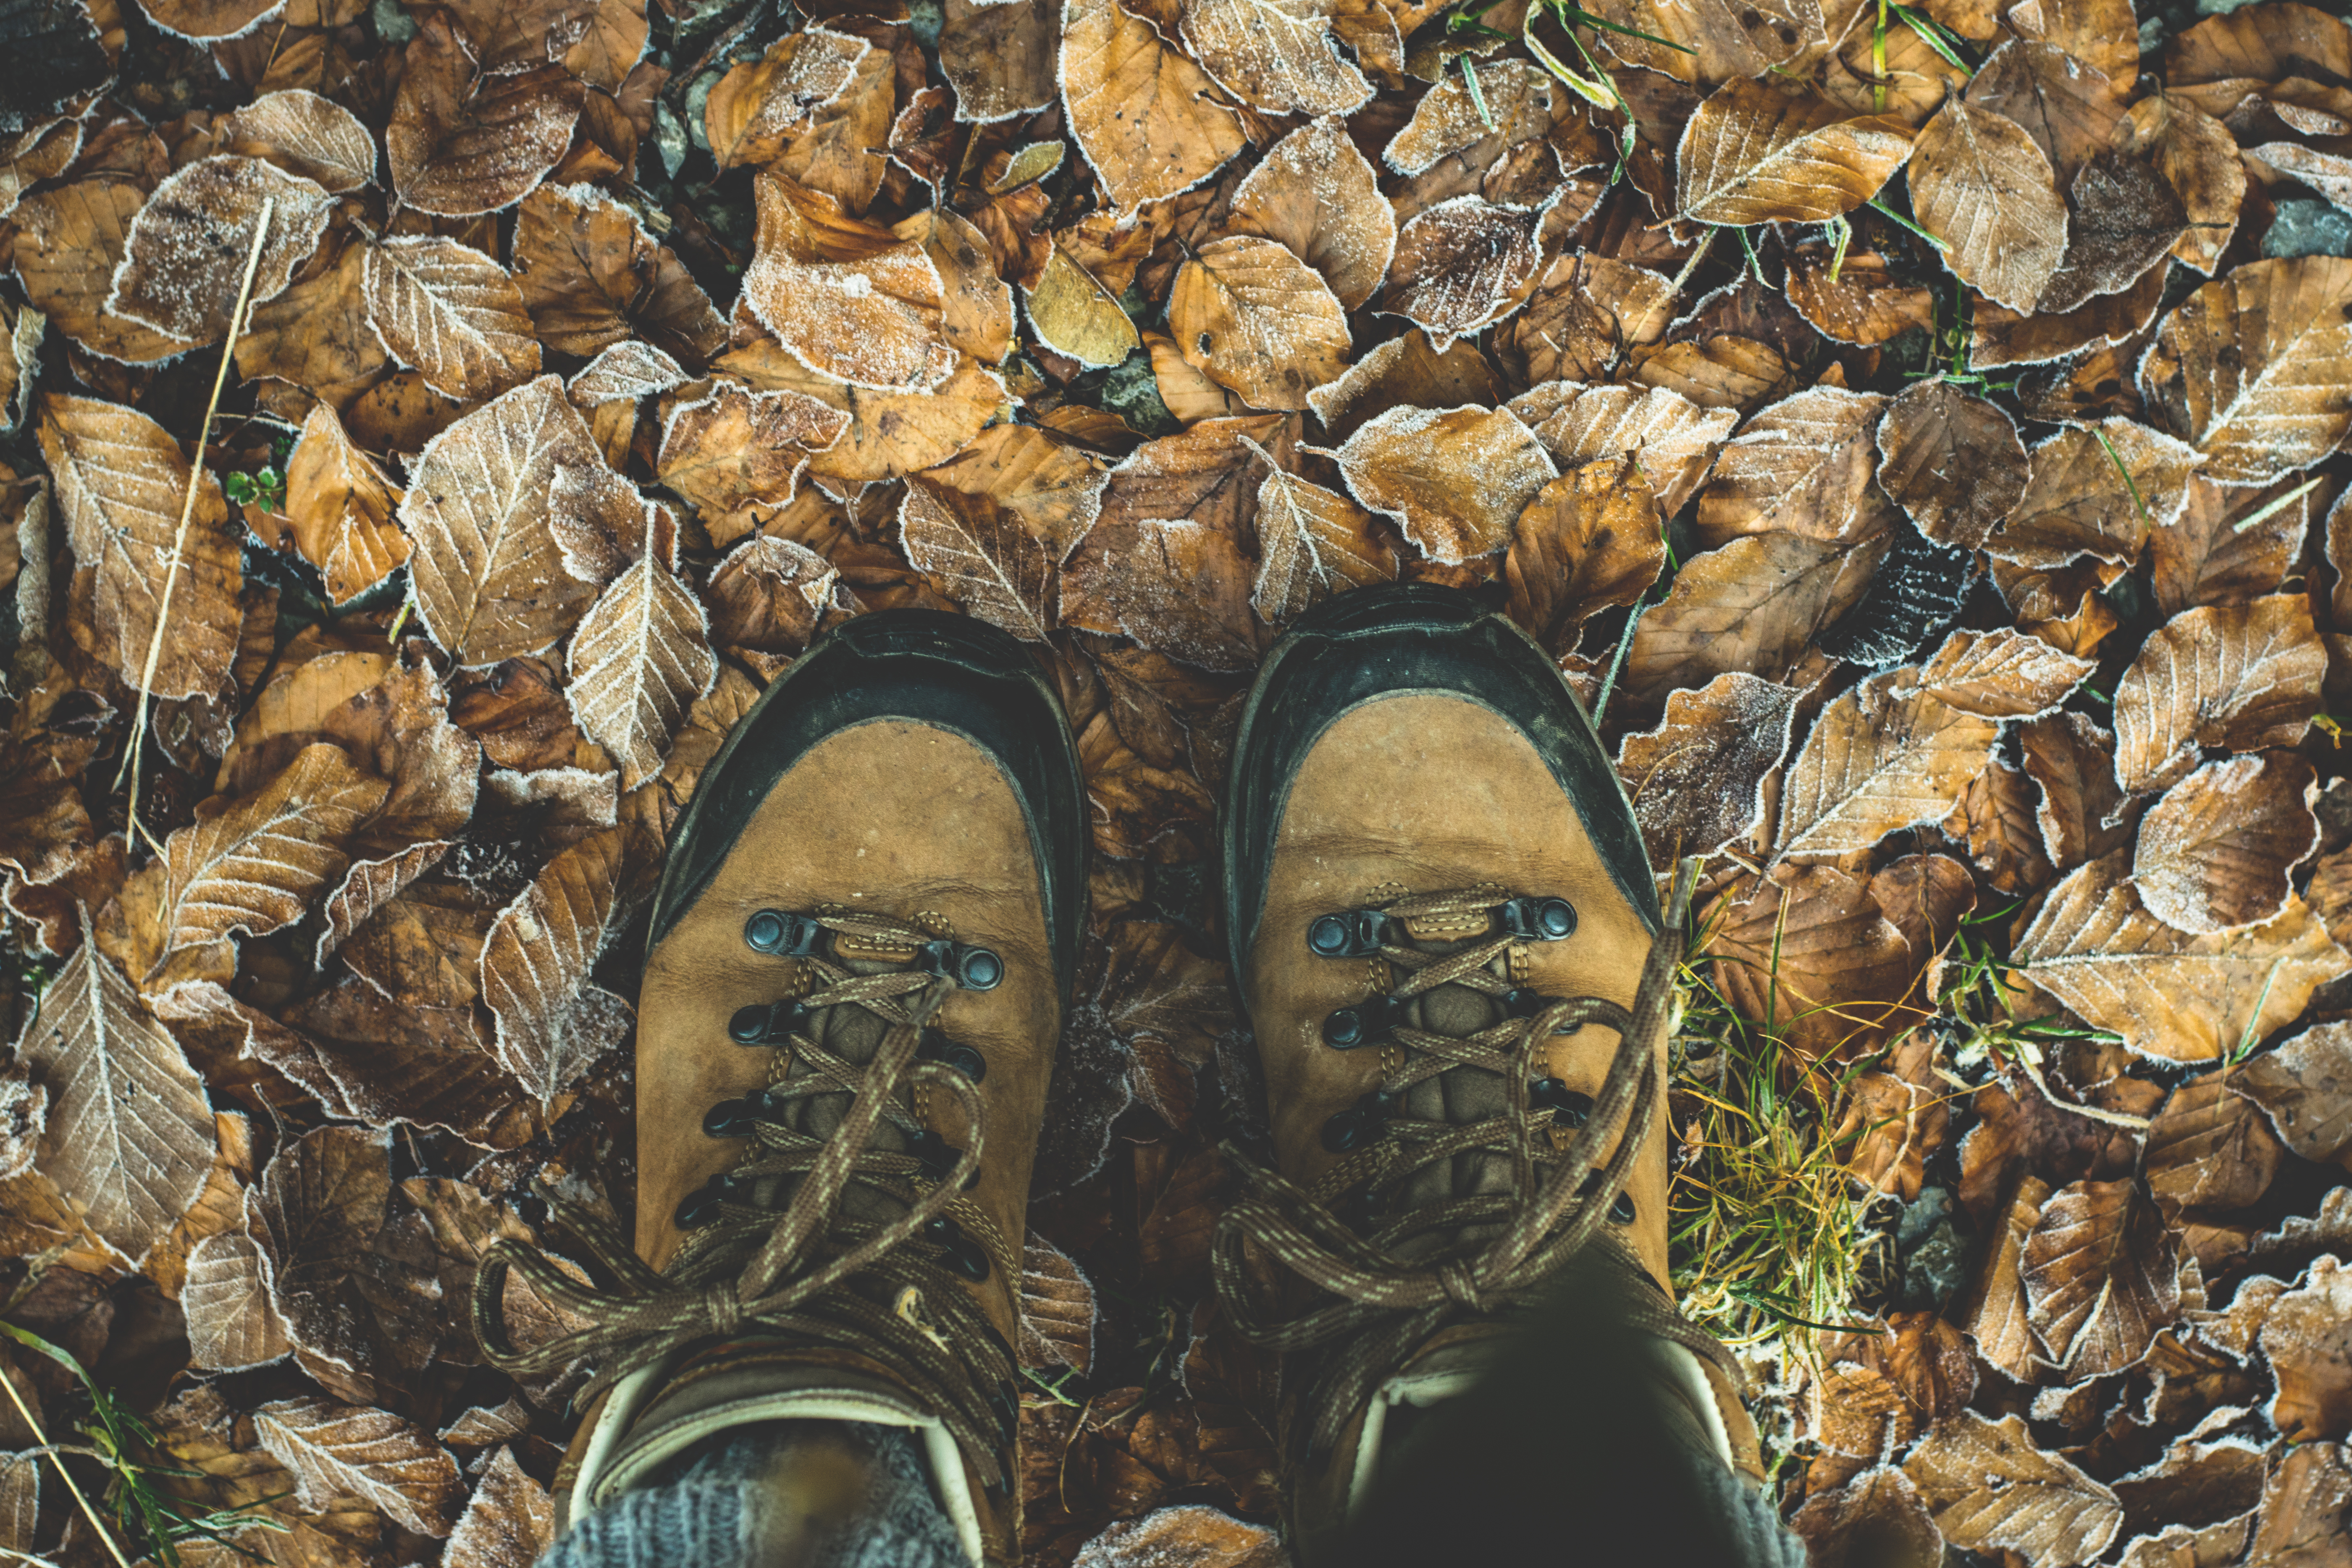 1920x1080 Background autumn, miscellanea, miscellaneous, legs, foliage, boots, shoes